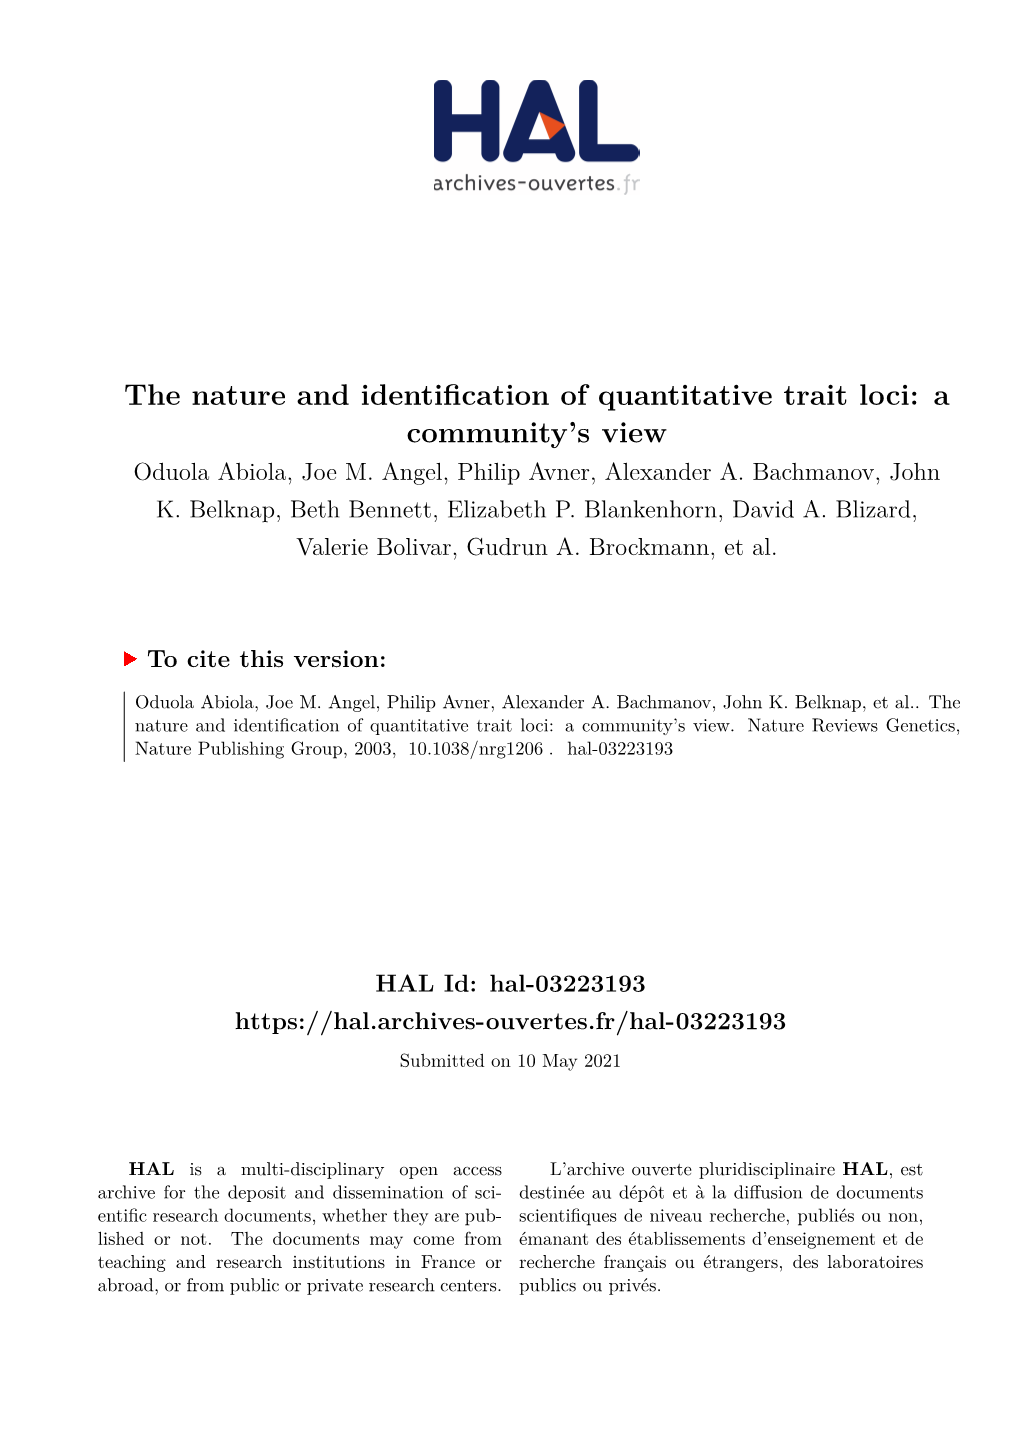 The Nature and Identification of Quantitative Trait Loci: a Community's